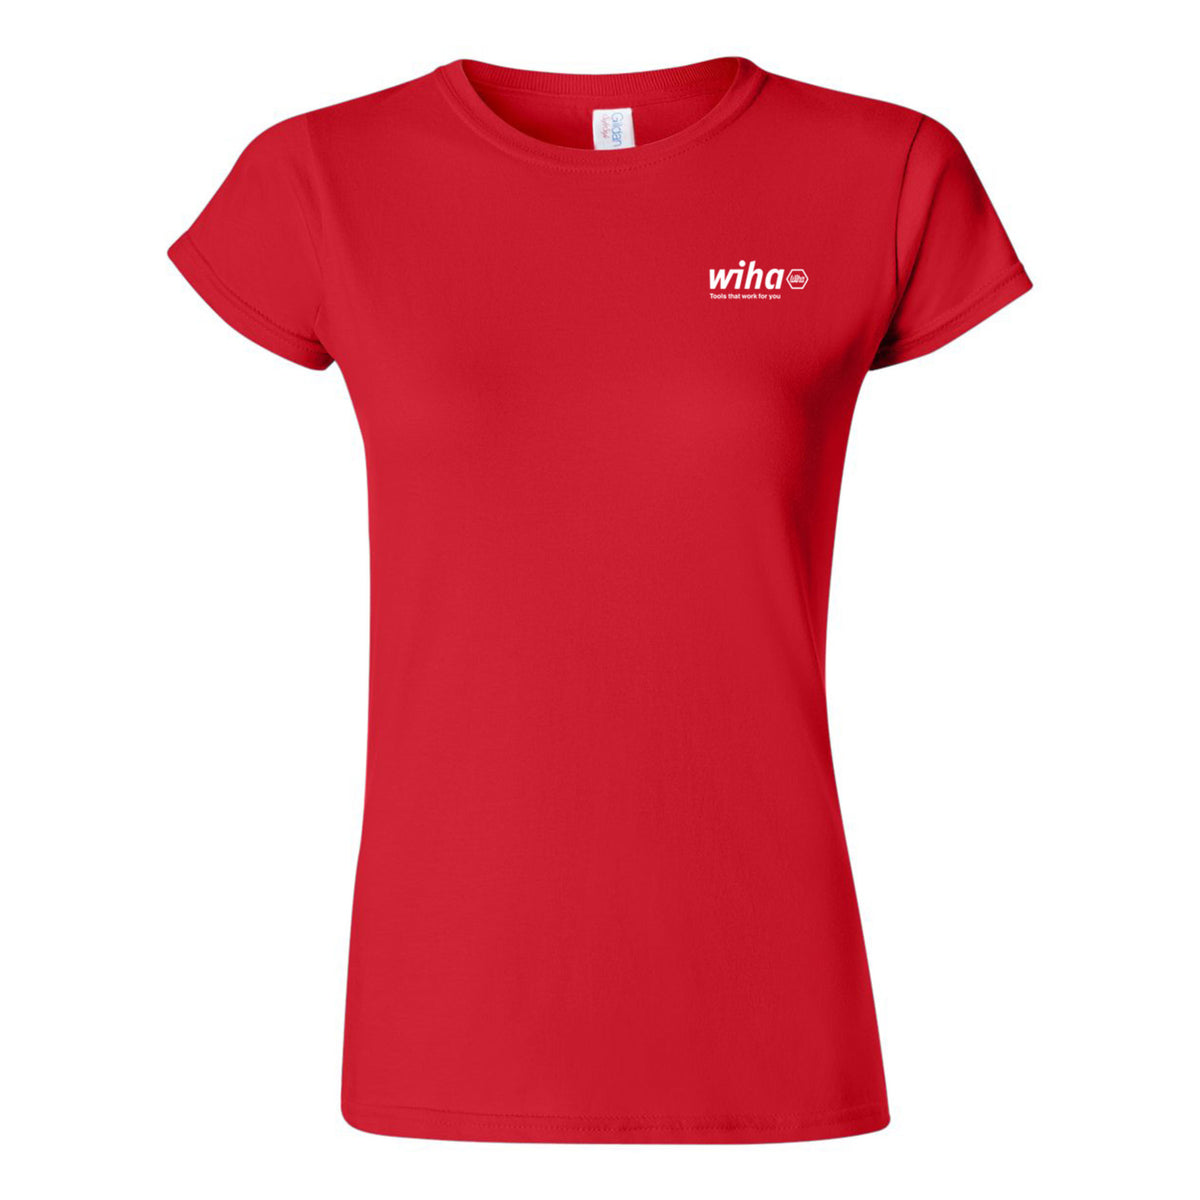 Wiha Women's T-Shirts